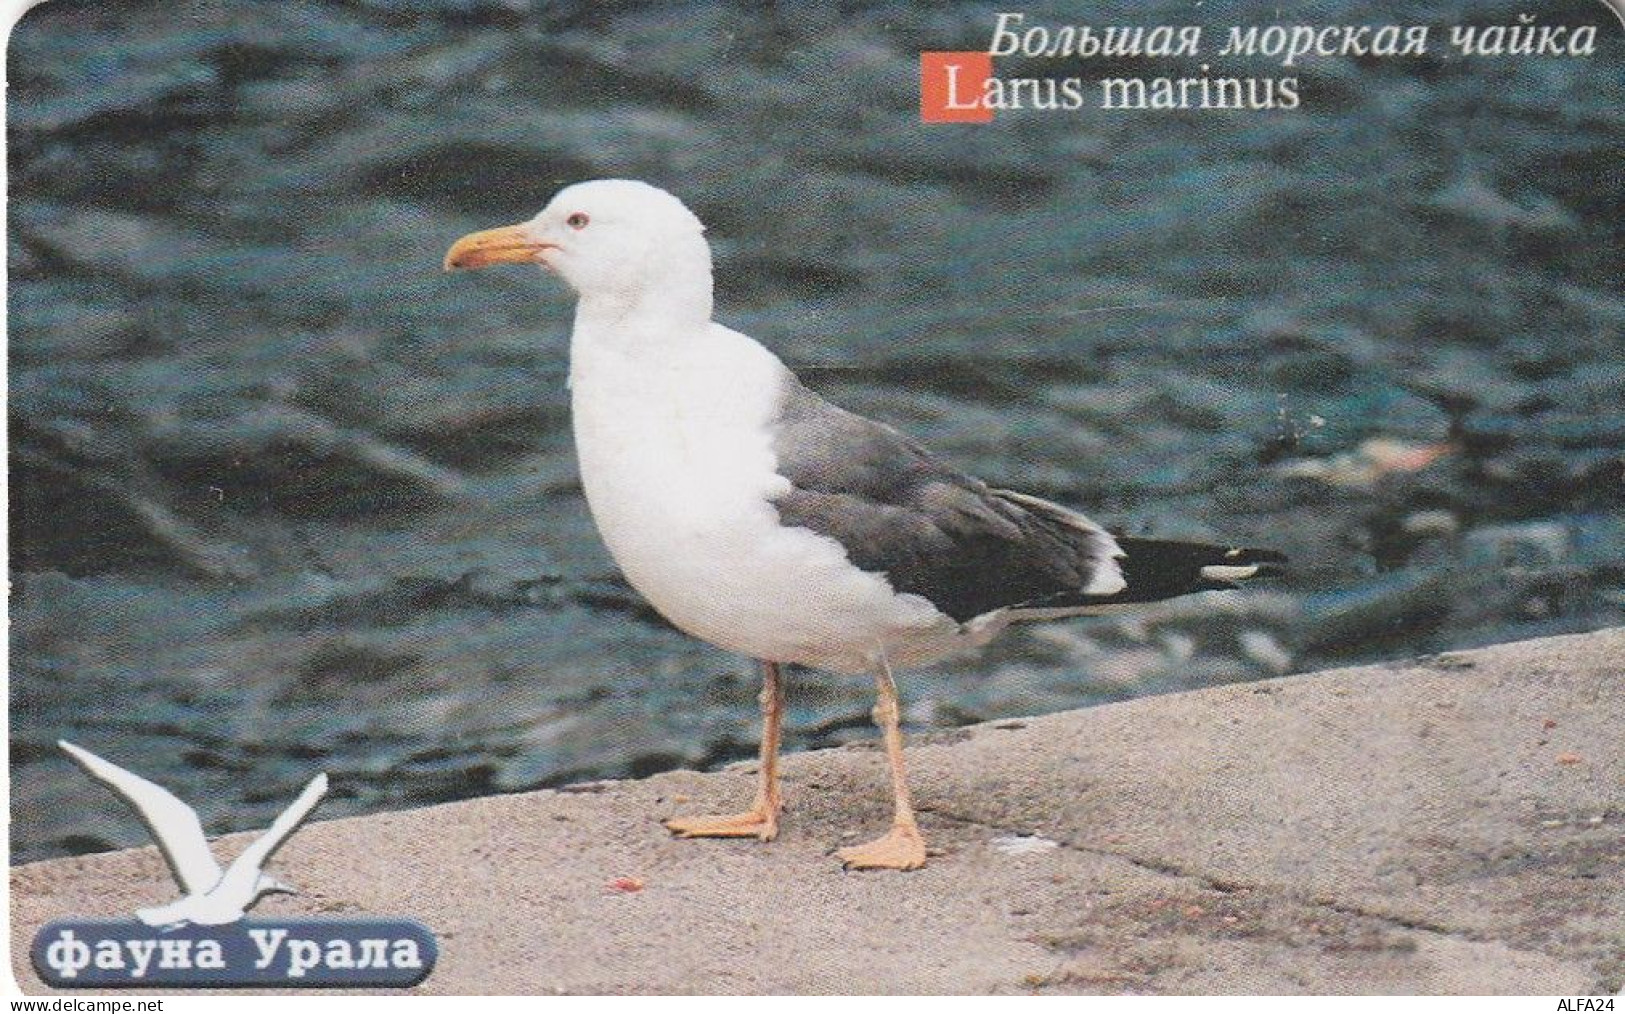 PHONE CARD RUSSIA Uralsvyazinform - Ekaterinburg (E100.3.7 - Russia